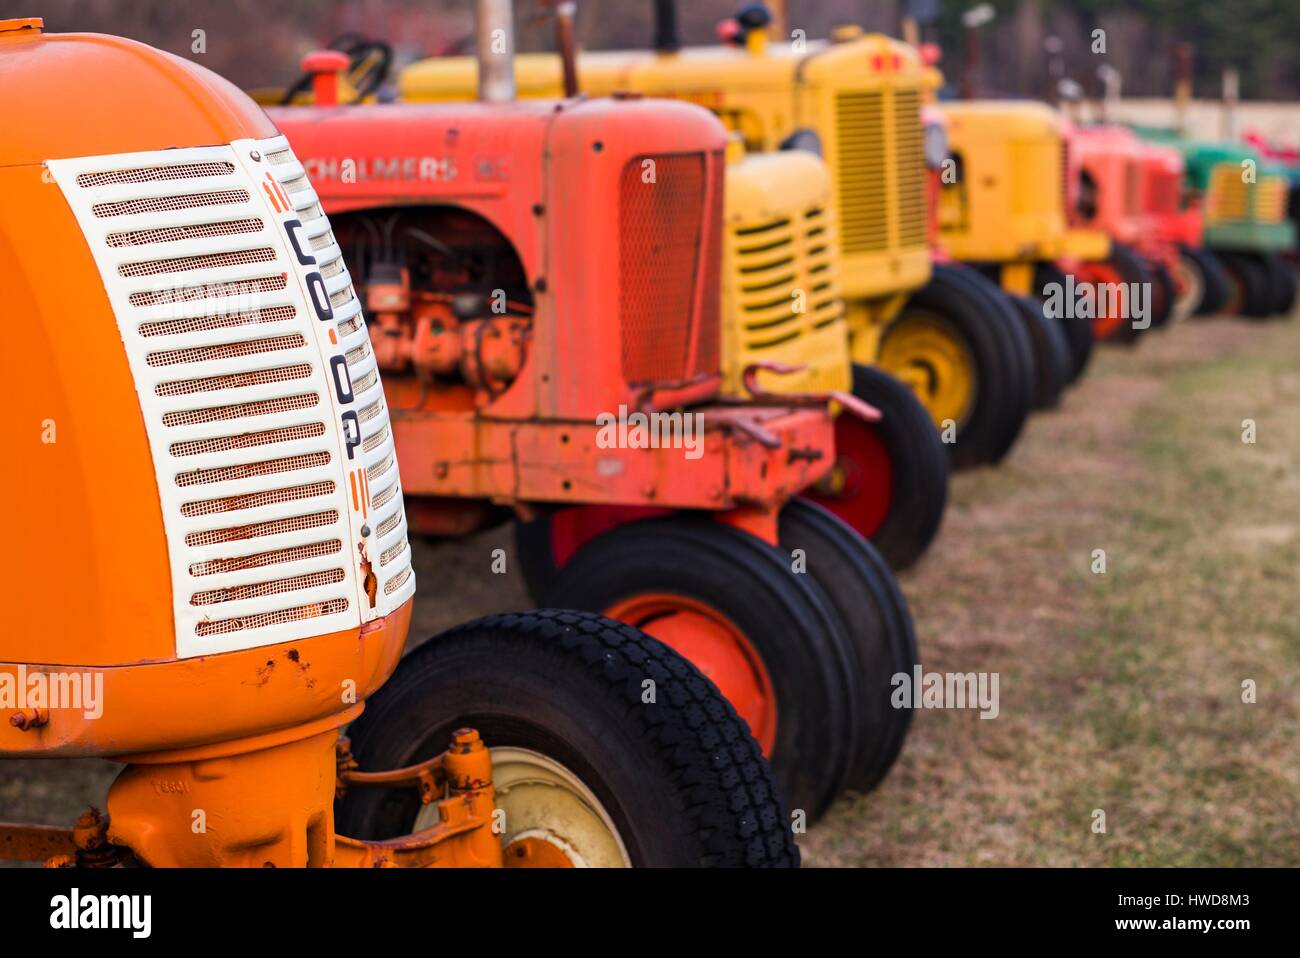 United States, New Hampshire, Manchester Center, antique farm tractors Stock Photo